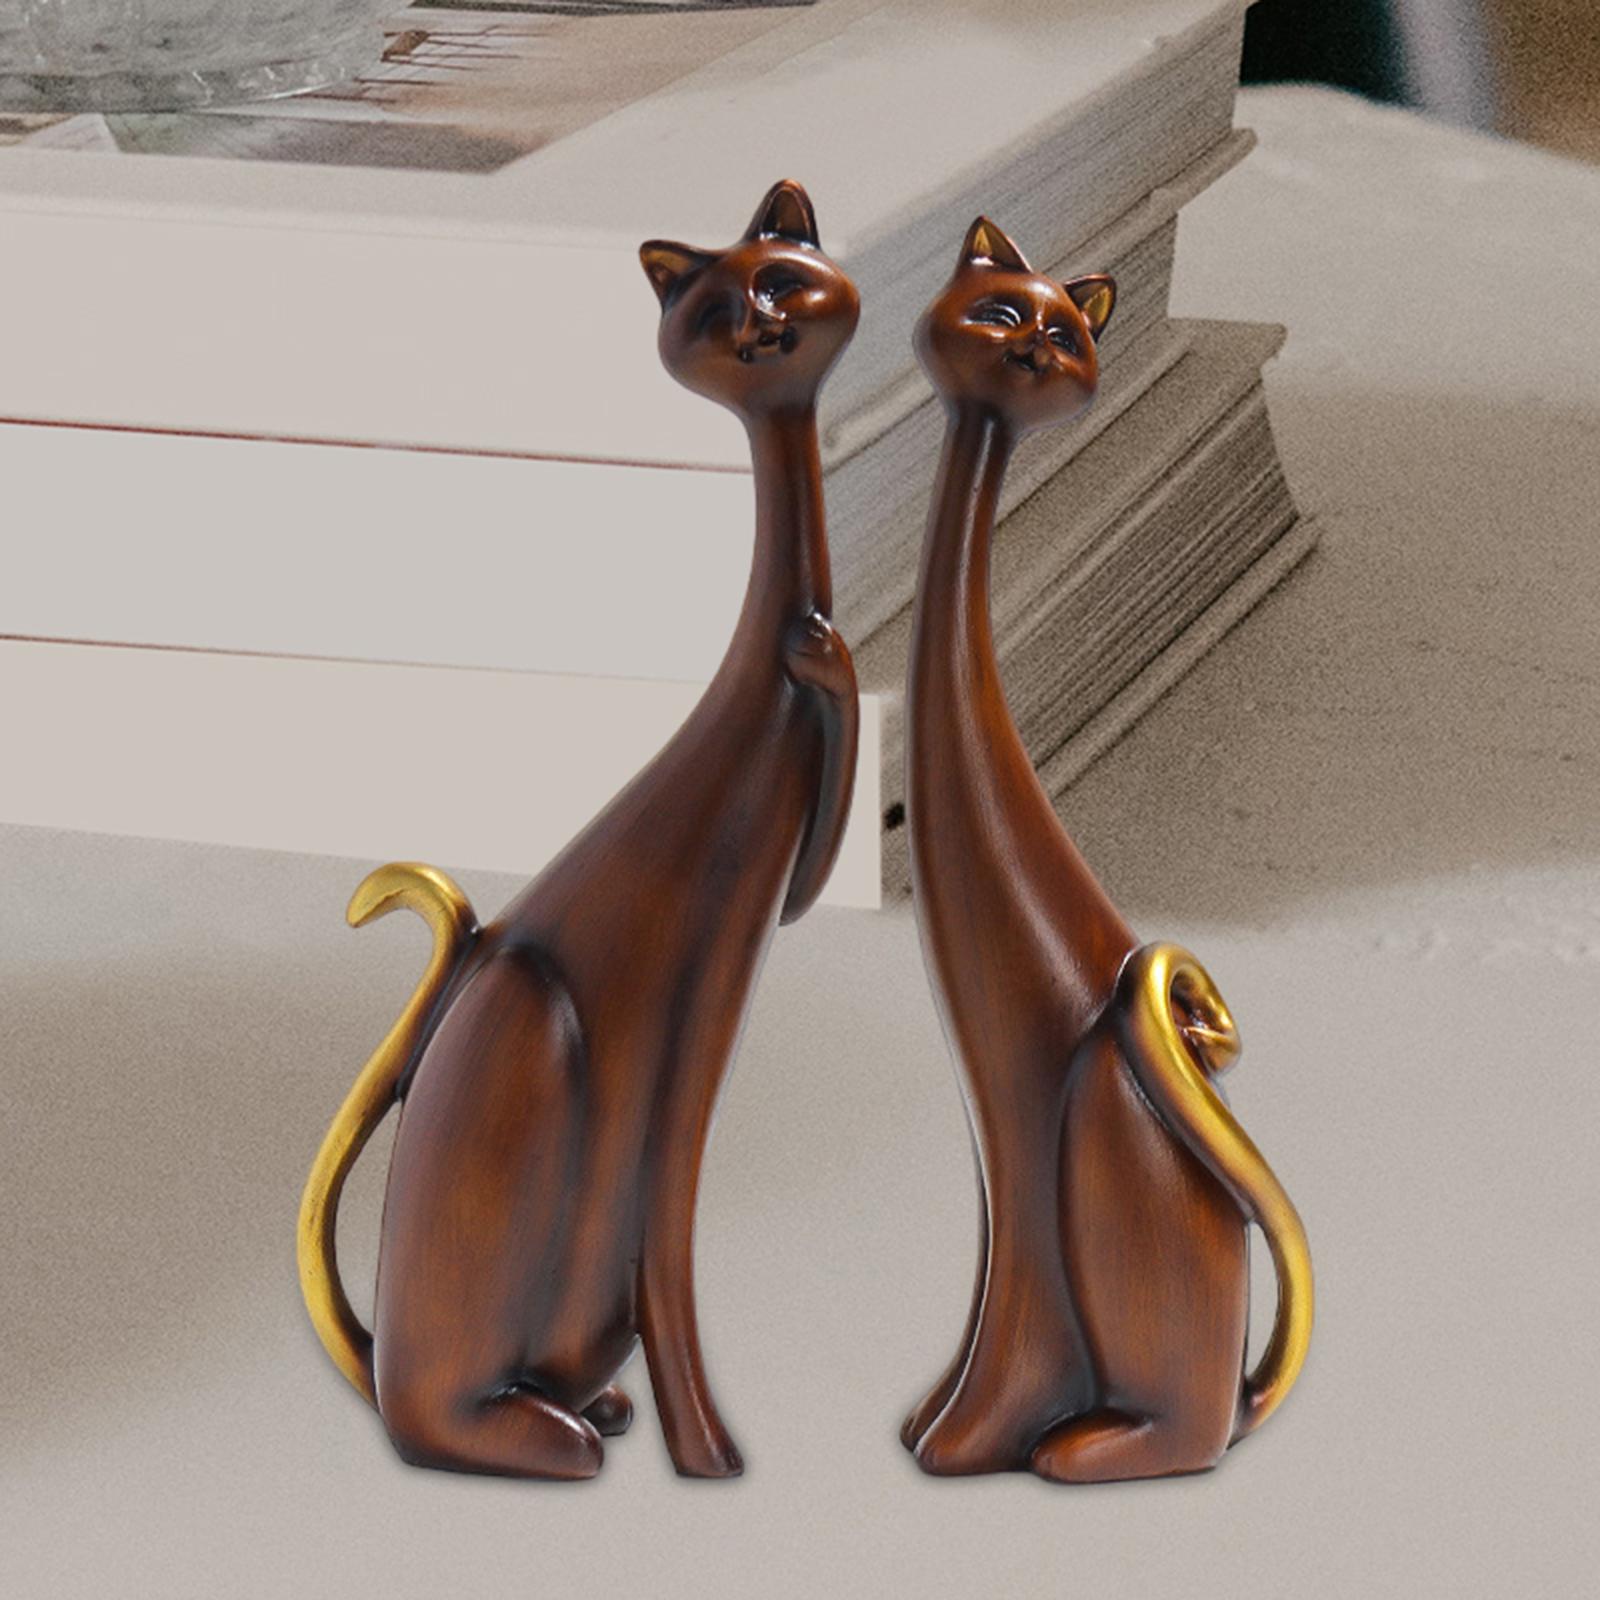 Resin Sculpture Statue Gift Souvenir Cat Ornaments for Bookshelf Office Home